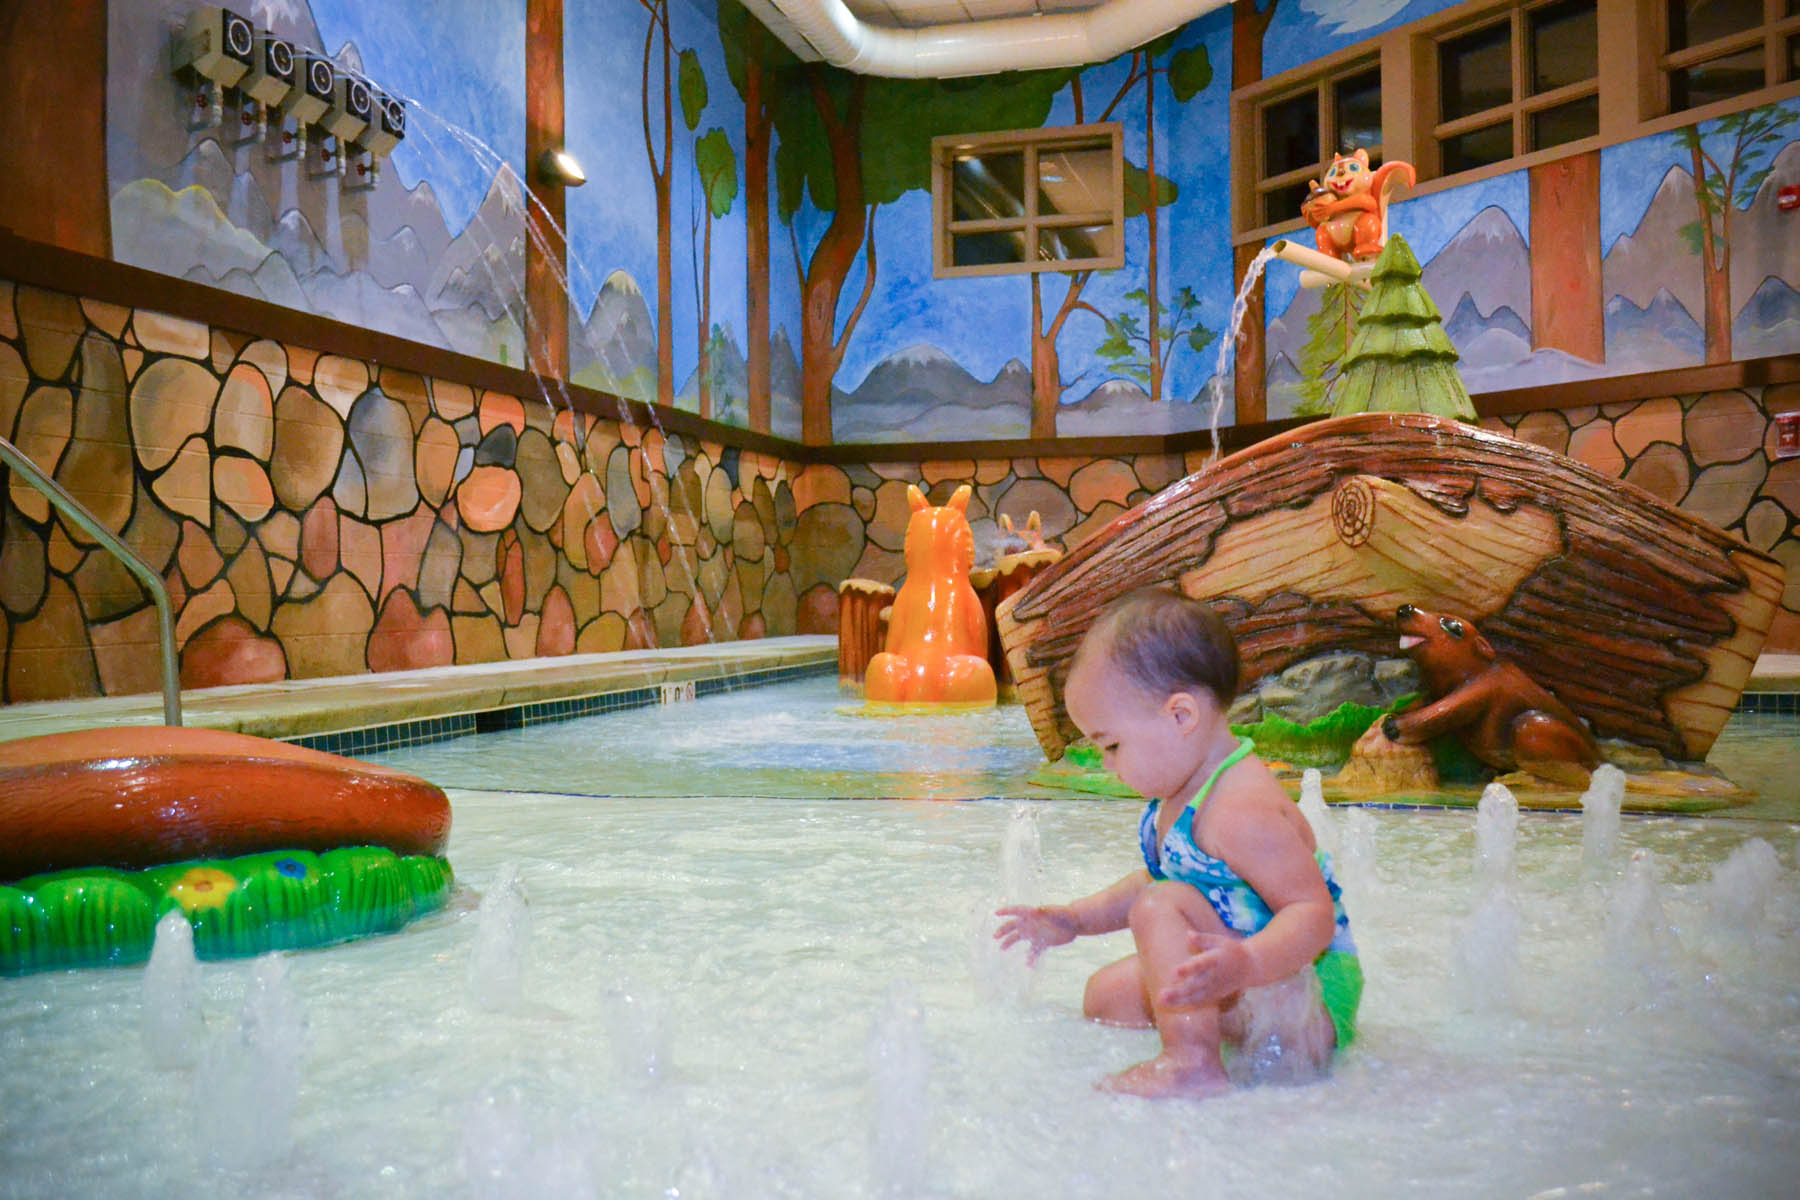 Toddler playing in splashpad fountains.